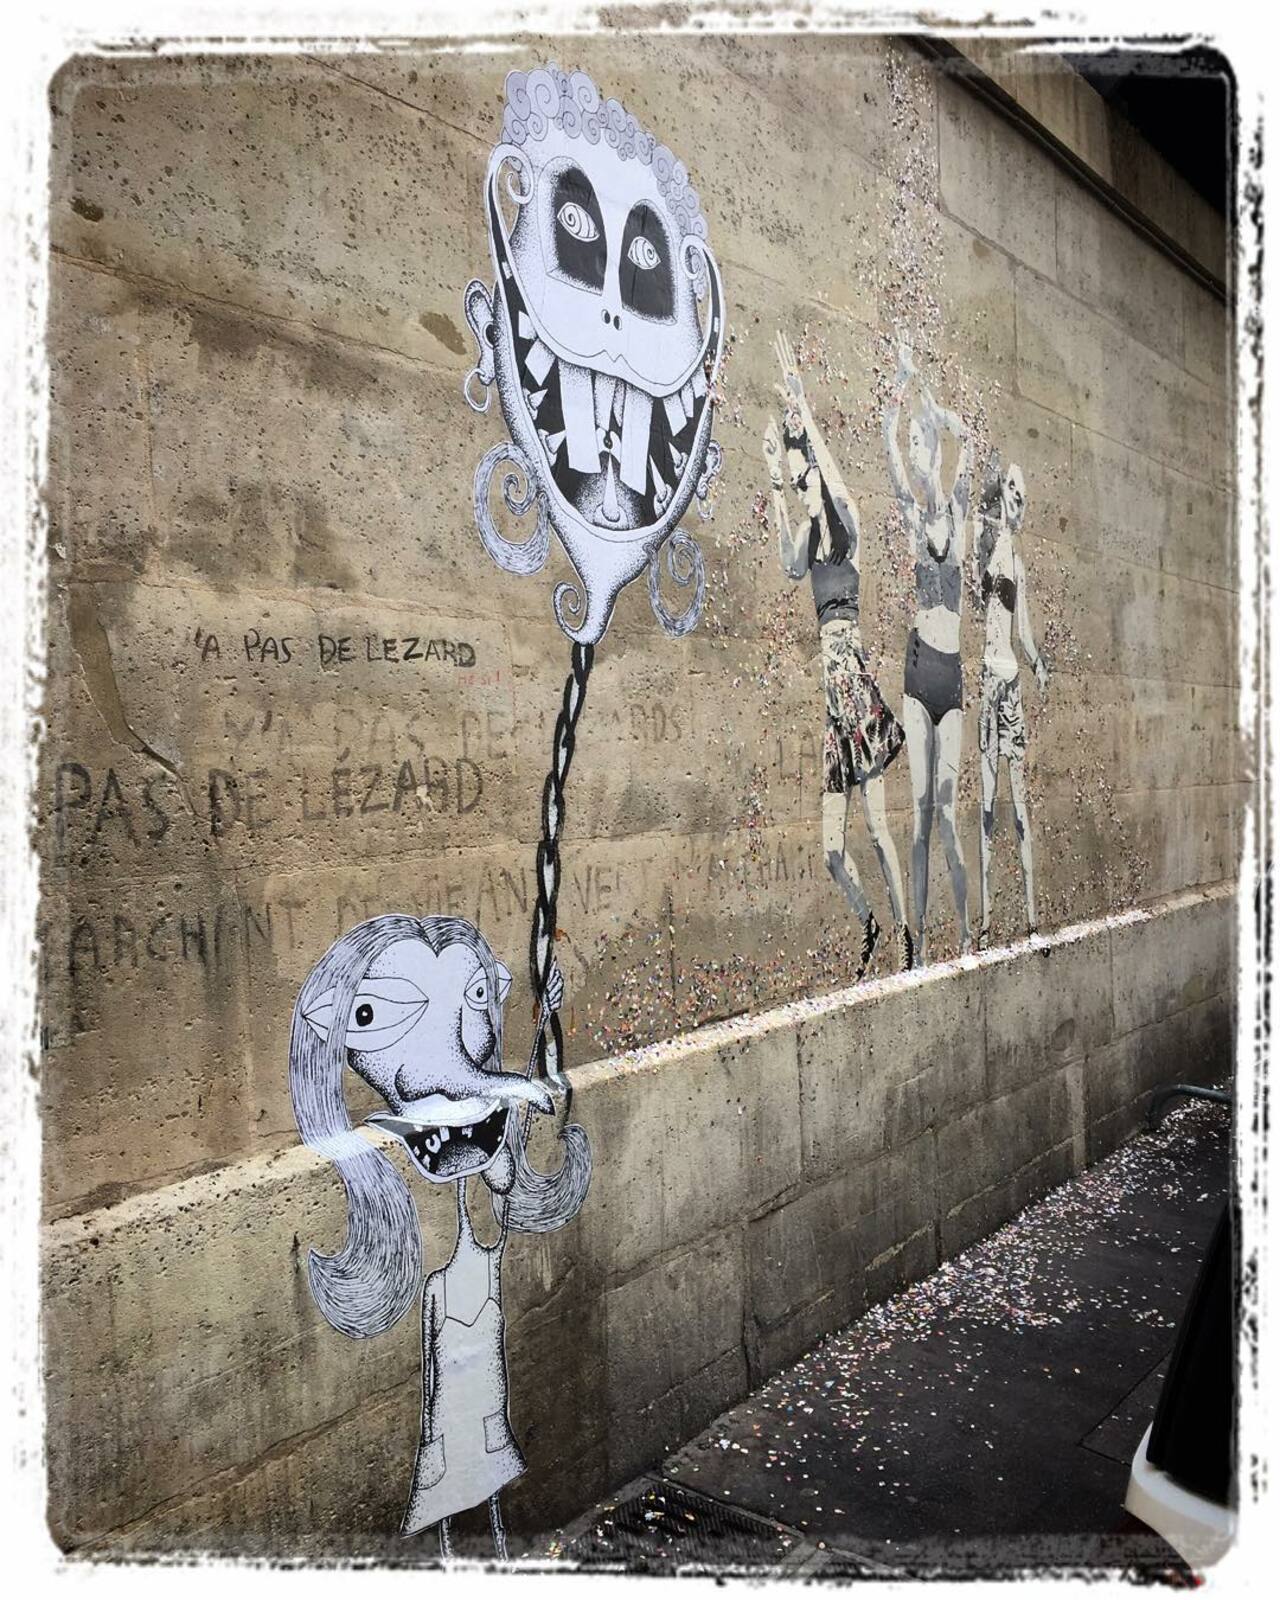 #Paris #graffiti photo by @gabyinparis http://ift.tt/1jCaTq9 #StreetArt https://t.co/ATSxOAJZOO